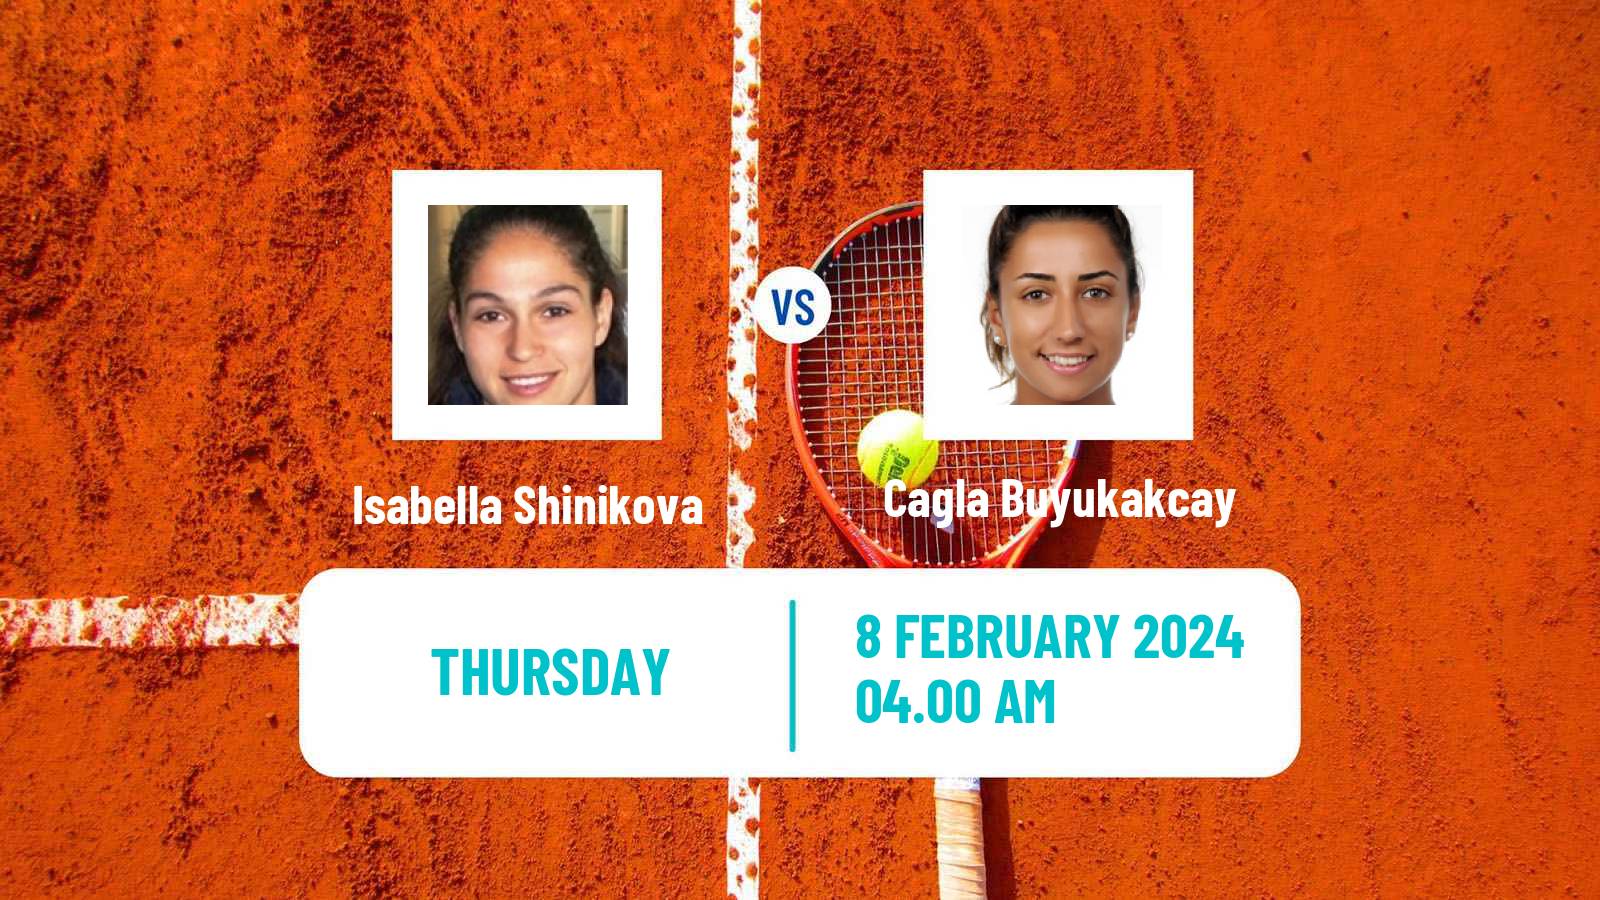 Tennis ITF W35 Antalya 2 Women Isabella Shinikova - Cagla Buyukakcay